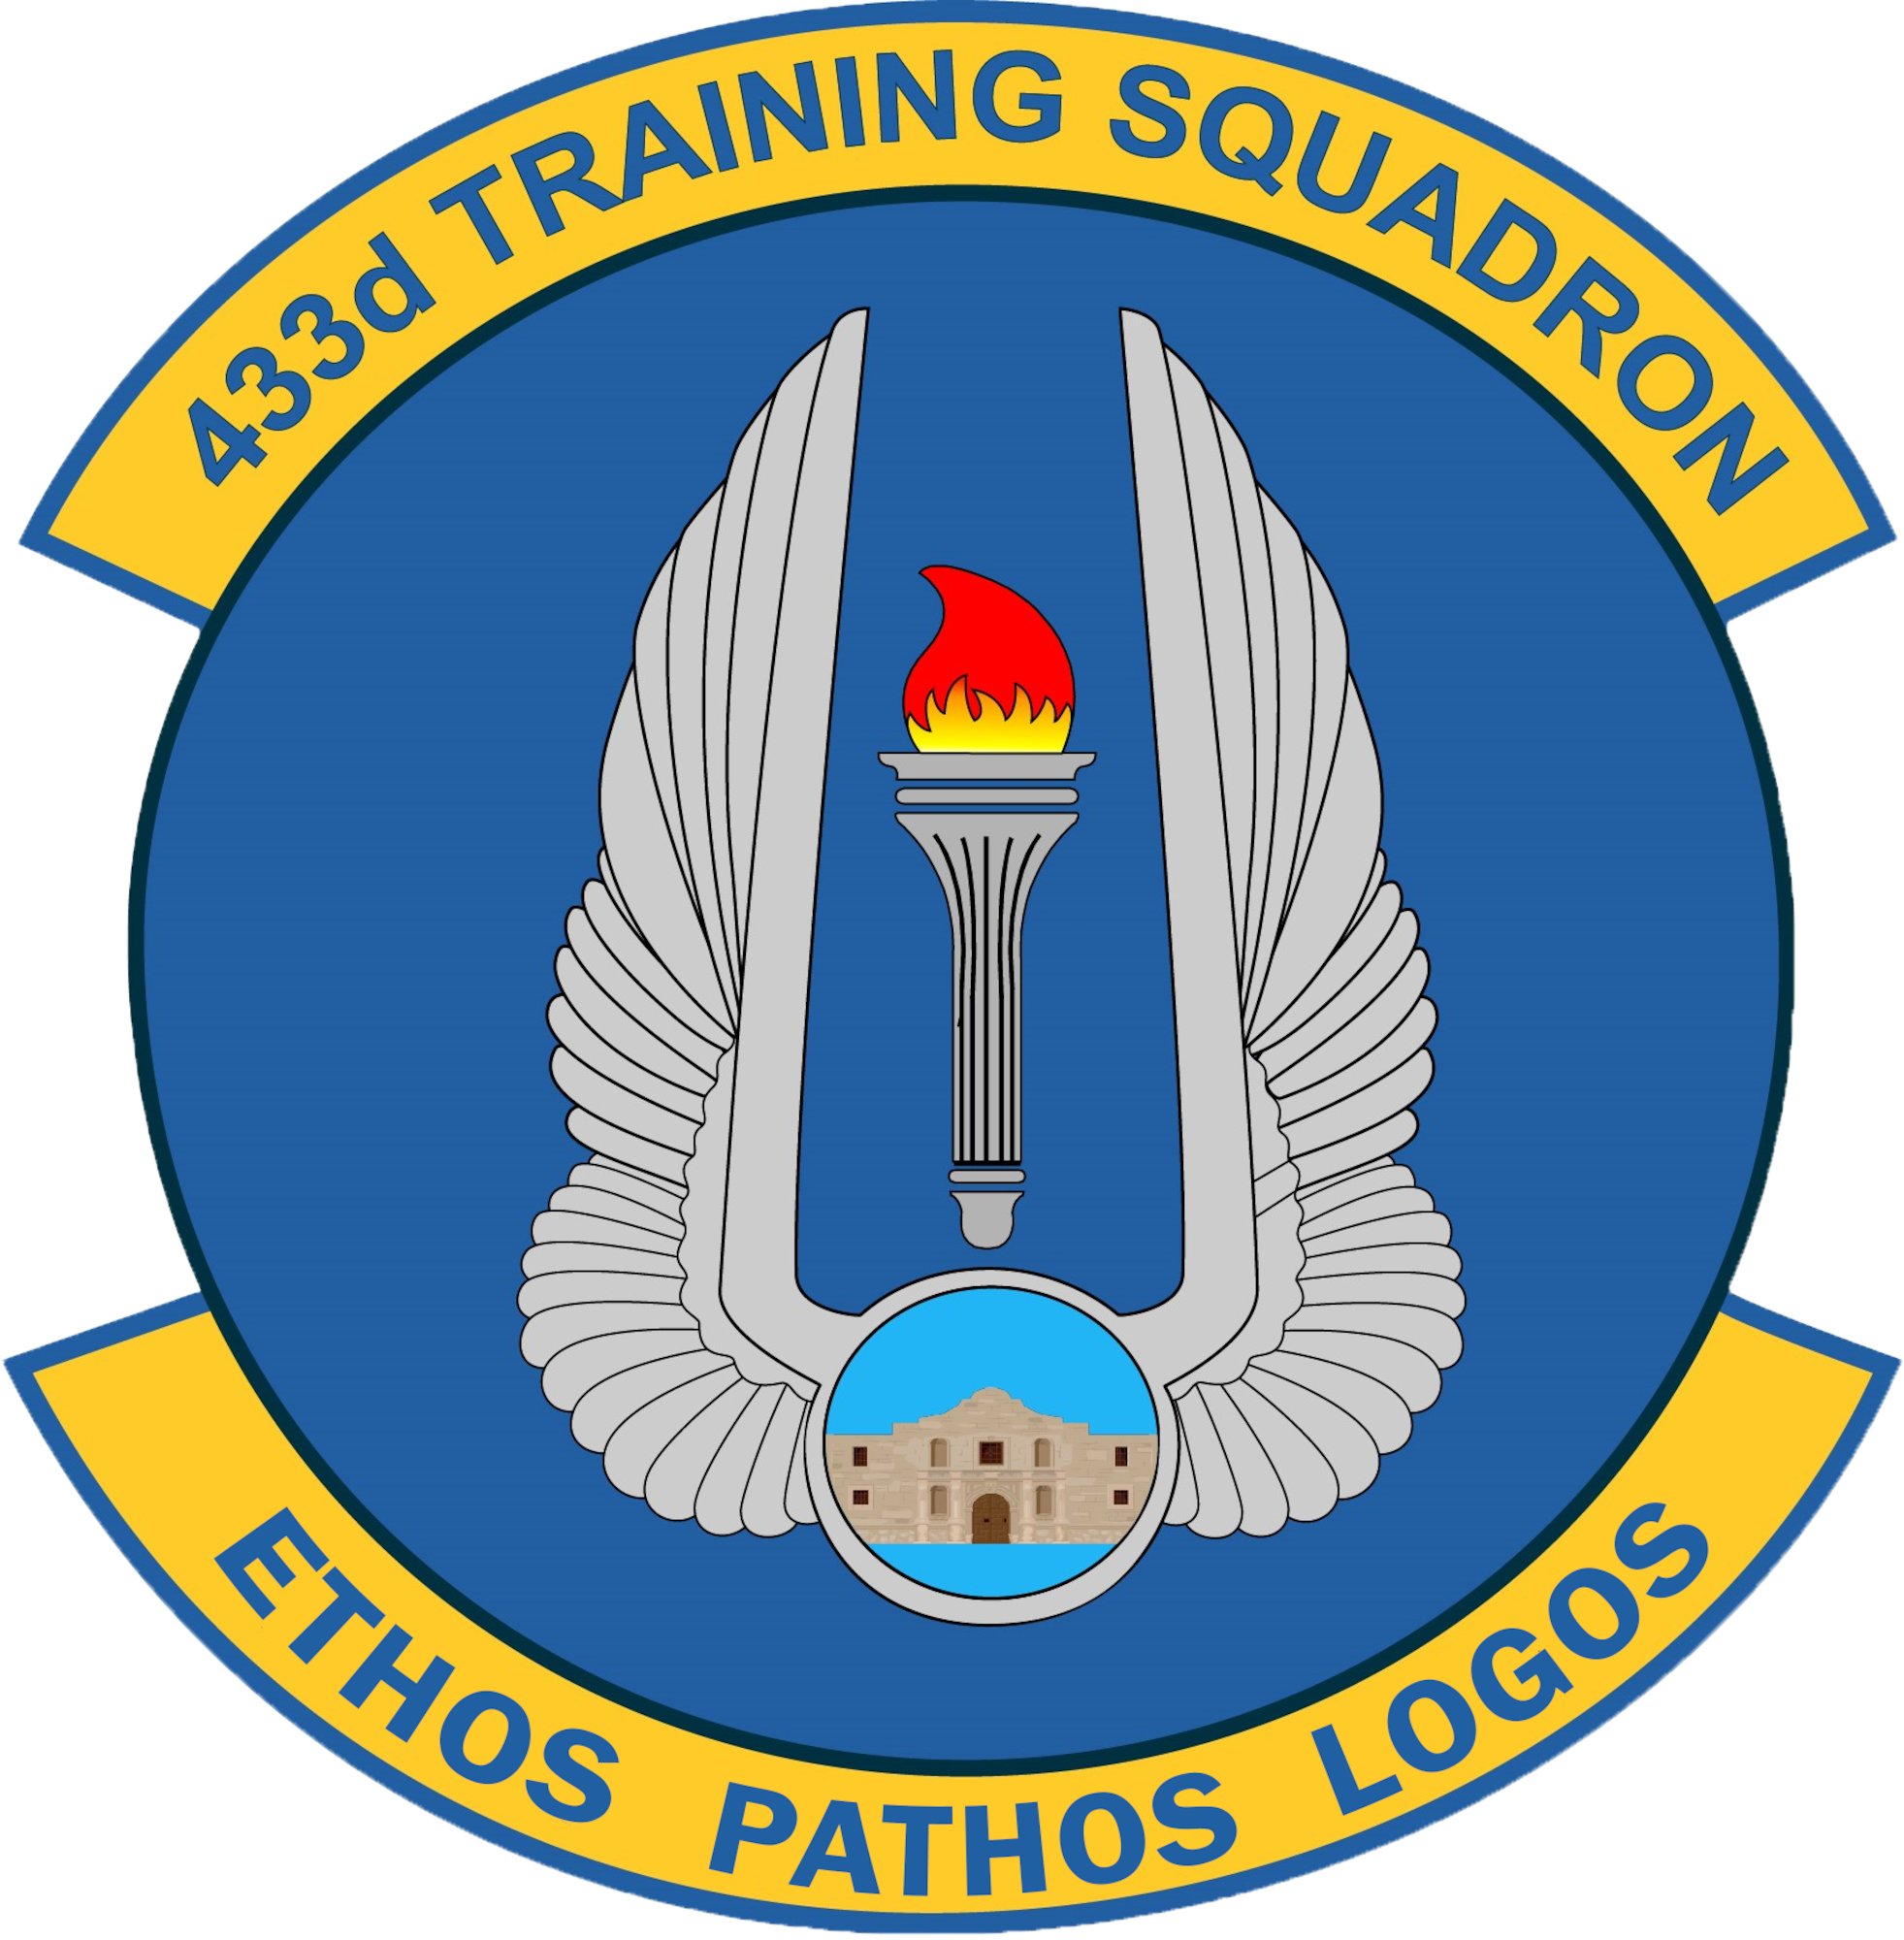 433rd Training Squadron